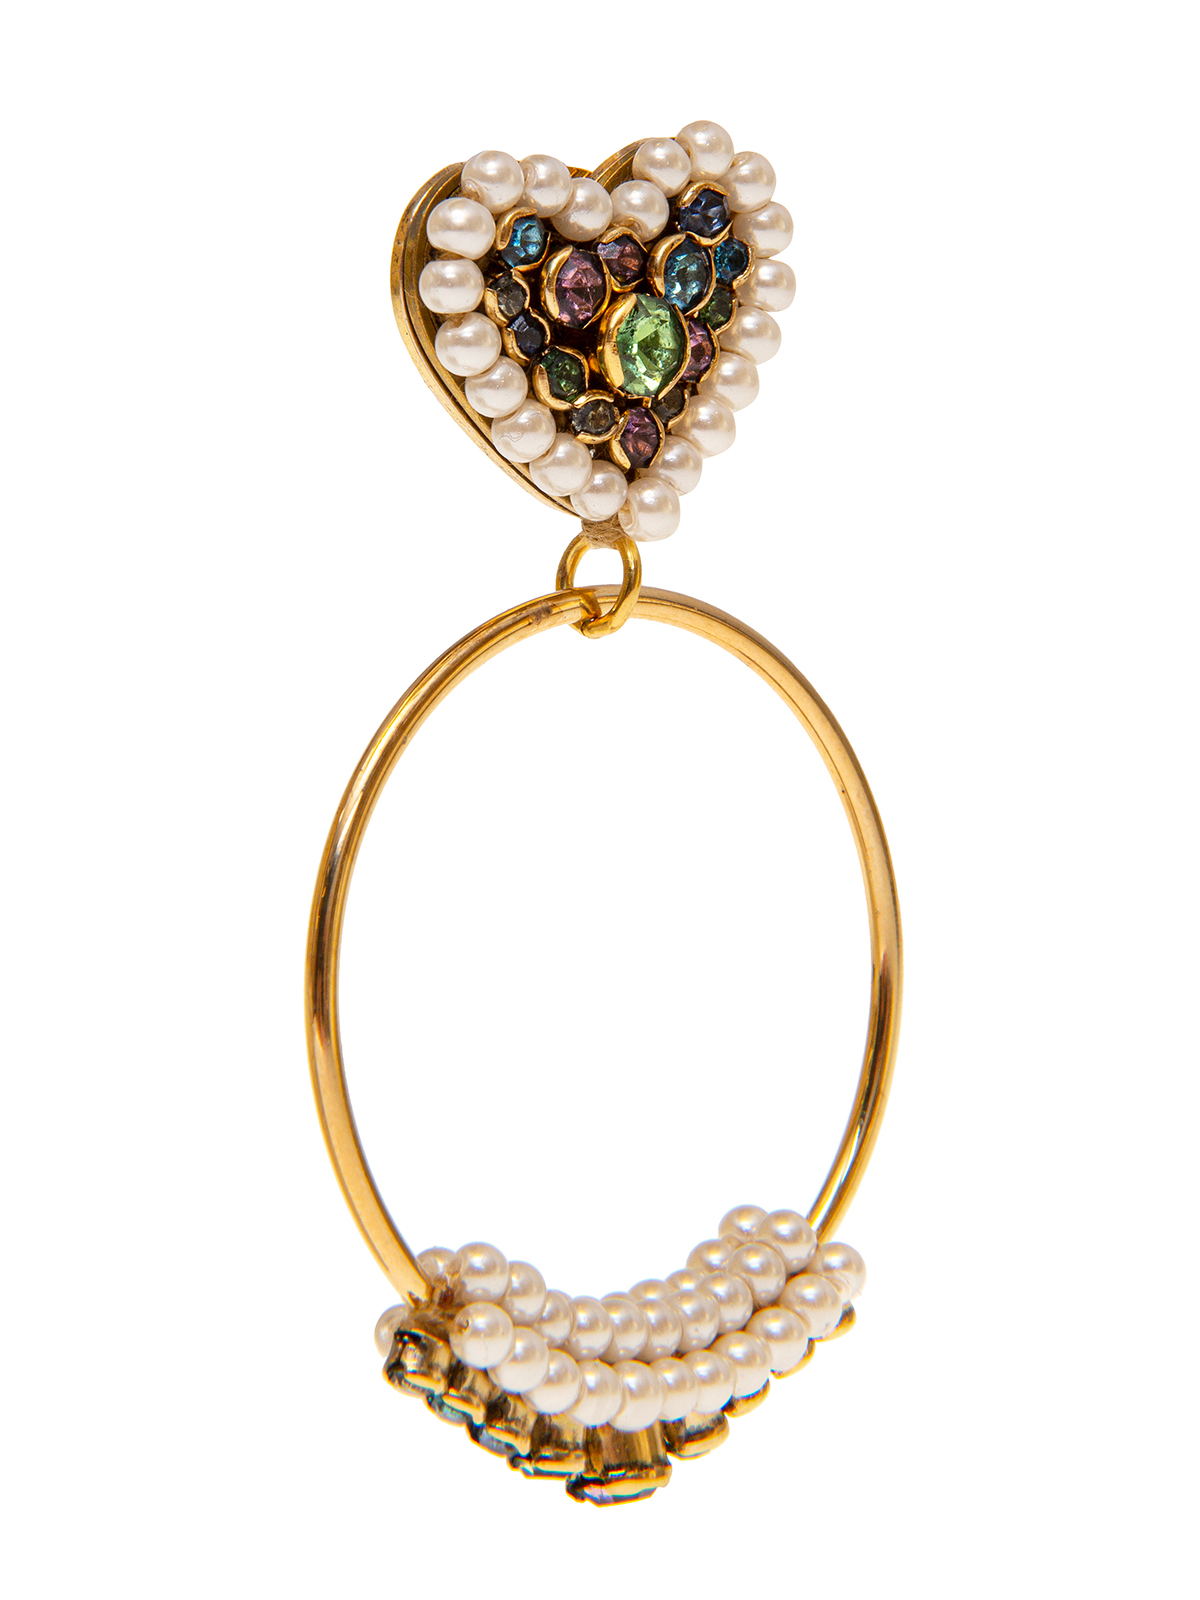 Multicolor heart earrings embellished with beaded hoops